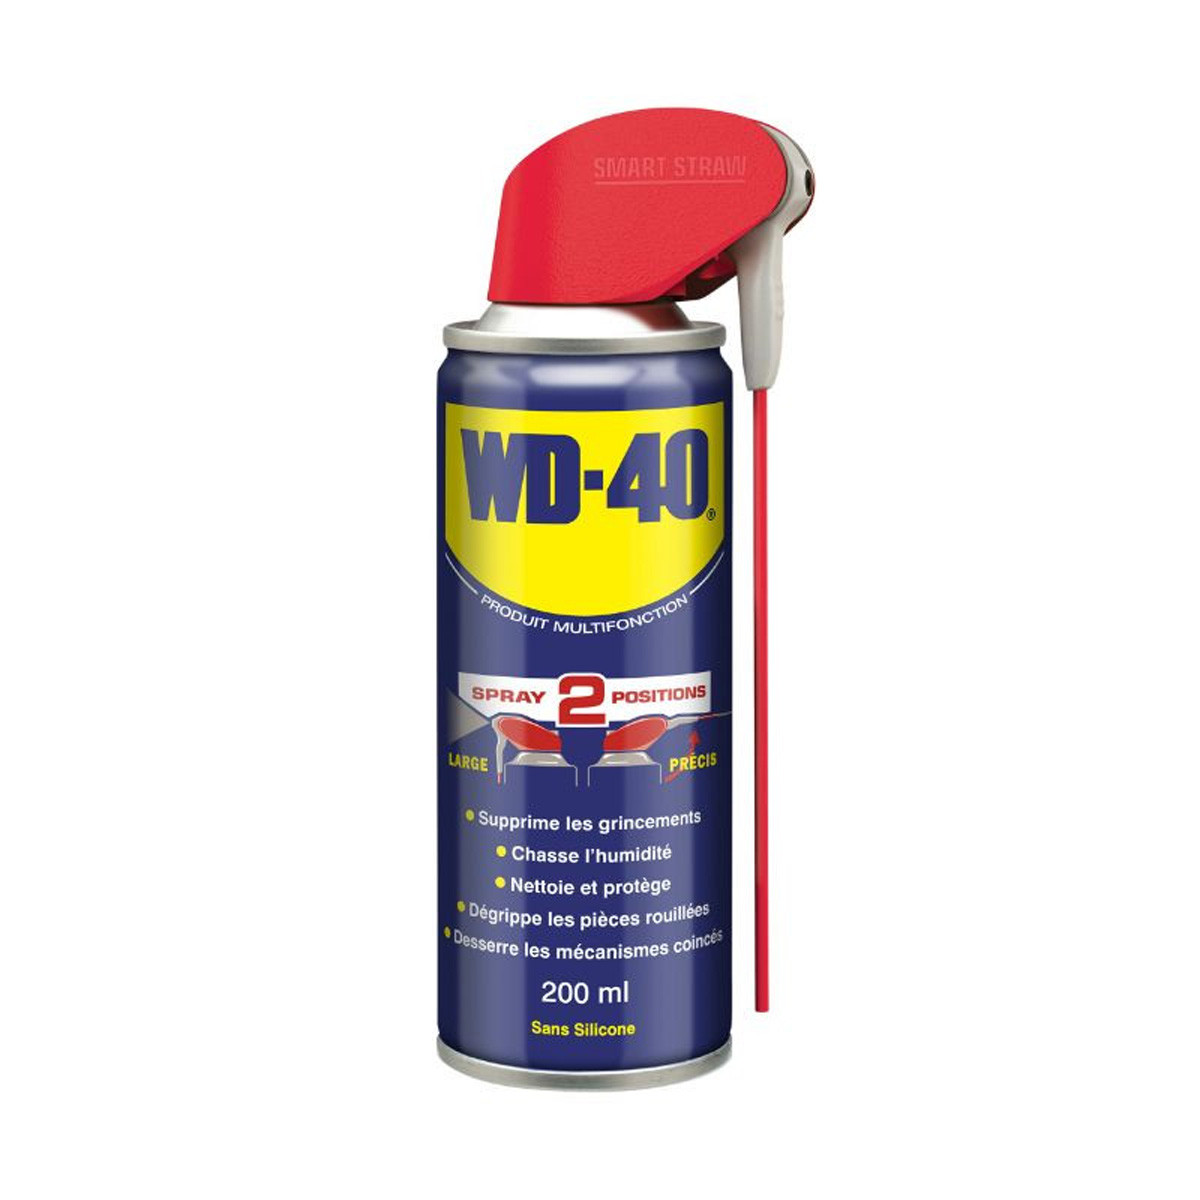 WD-40 Spray Lubricante Multiusos Flexible 400ml